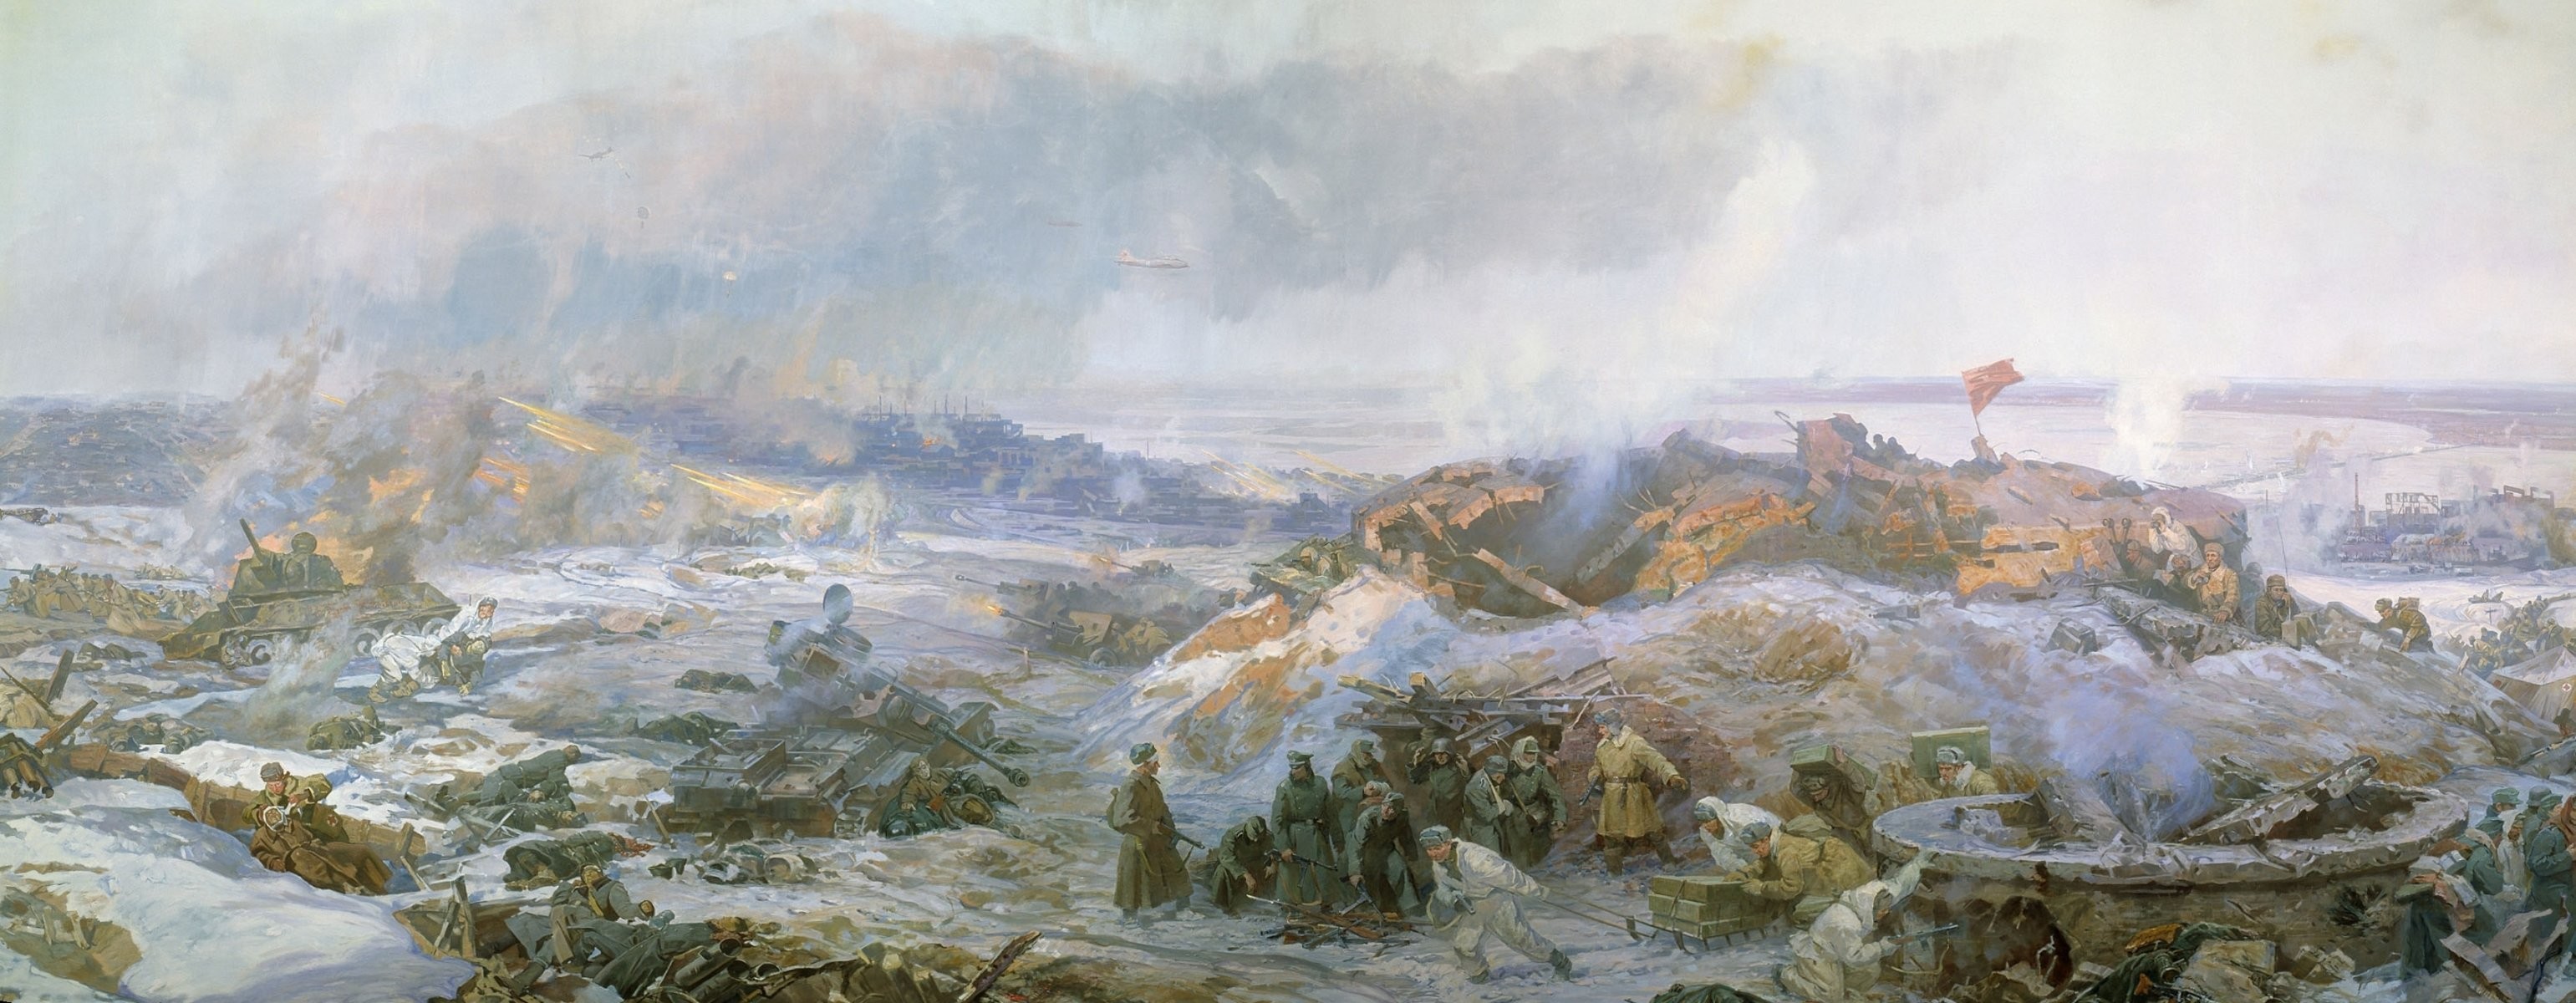 3082x1200 painting pattern stalingrad winter smoke ruins men infantry the great  patriotic war